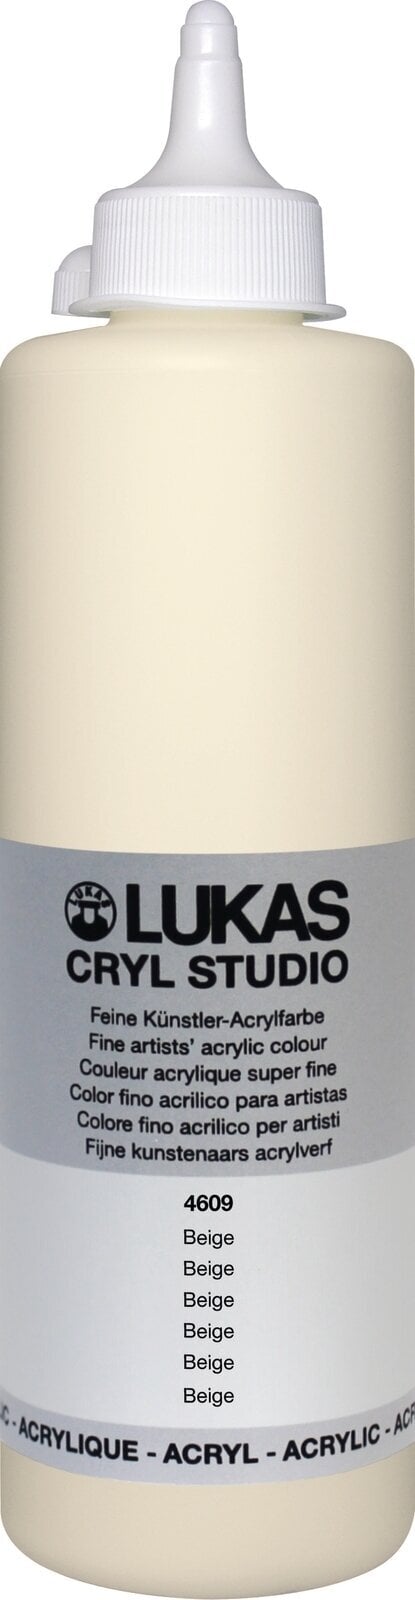 Acrylic Paint Lukas Cryl Studio Acrylic Paint 500 ml Beige